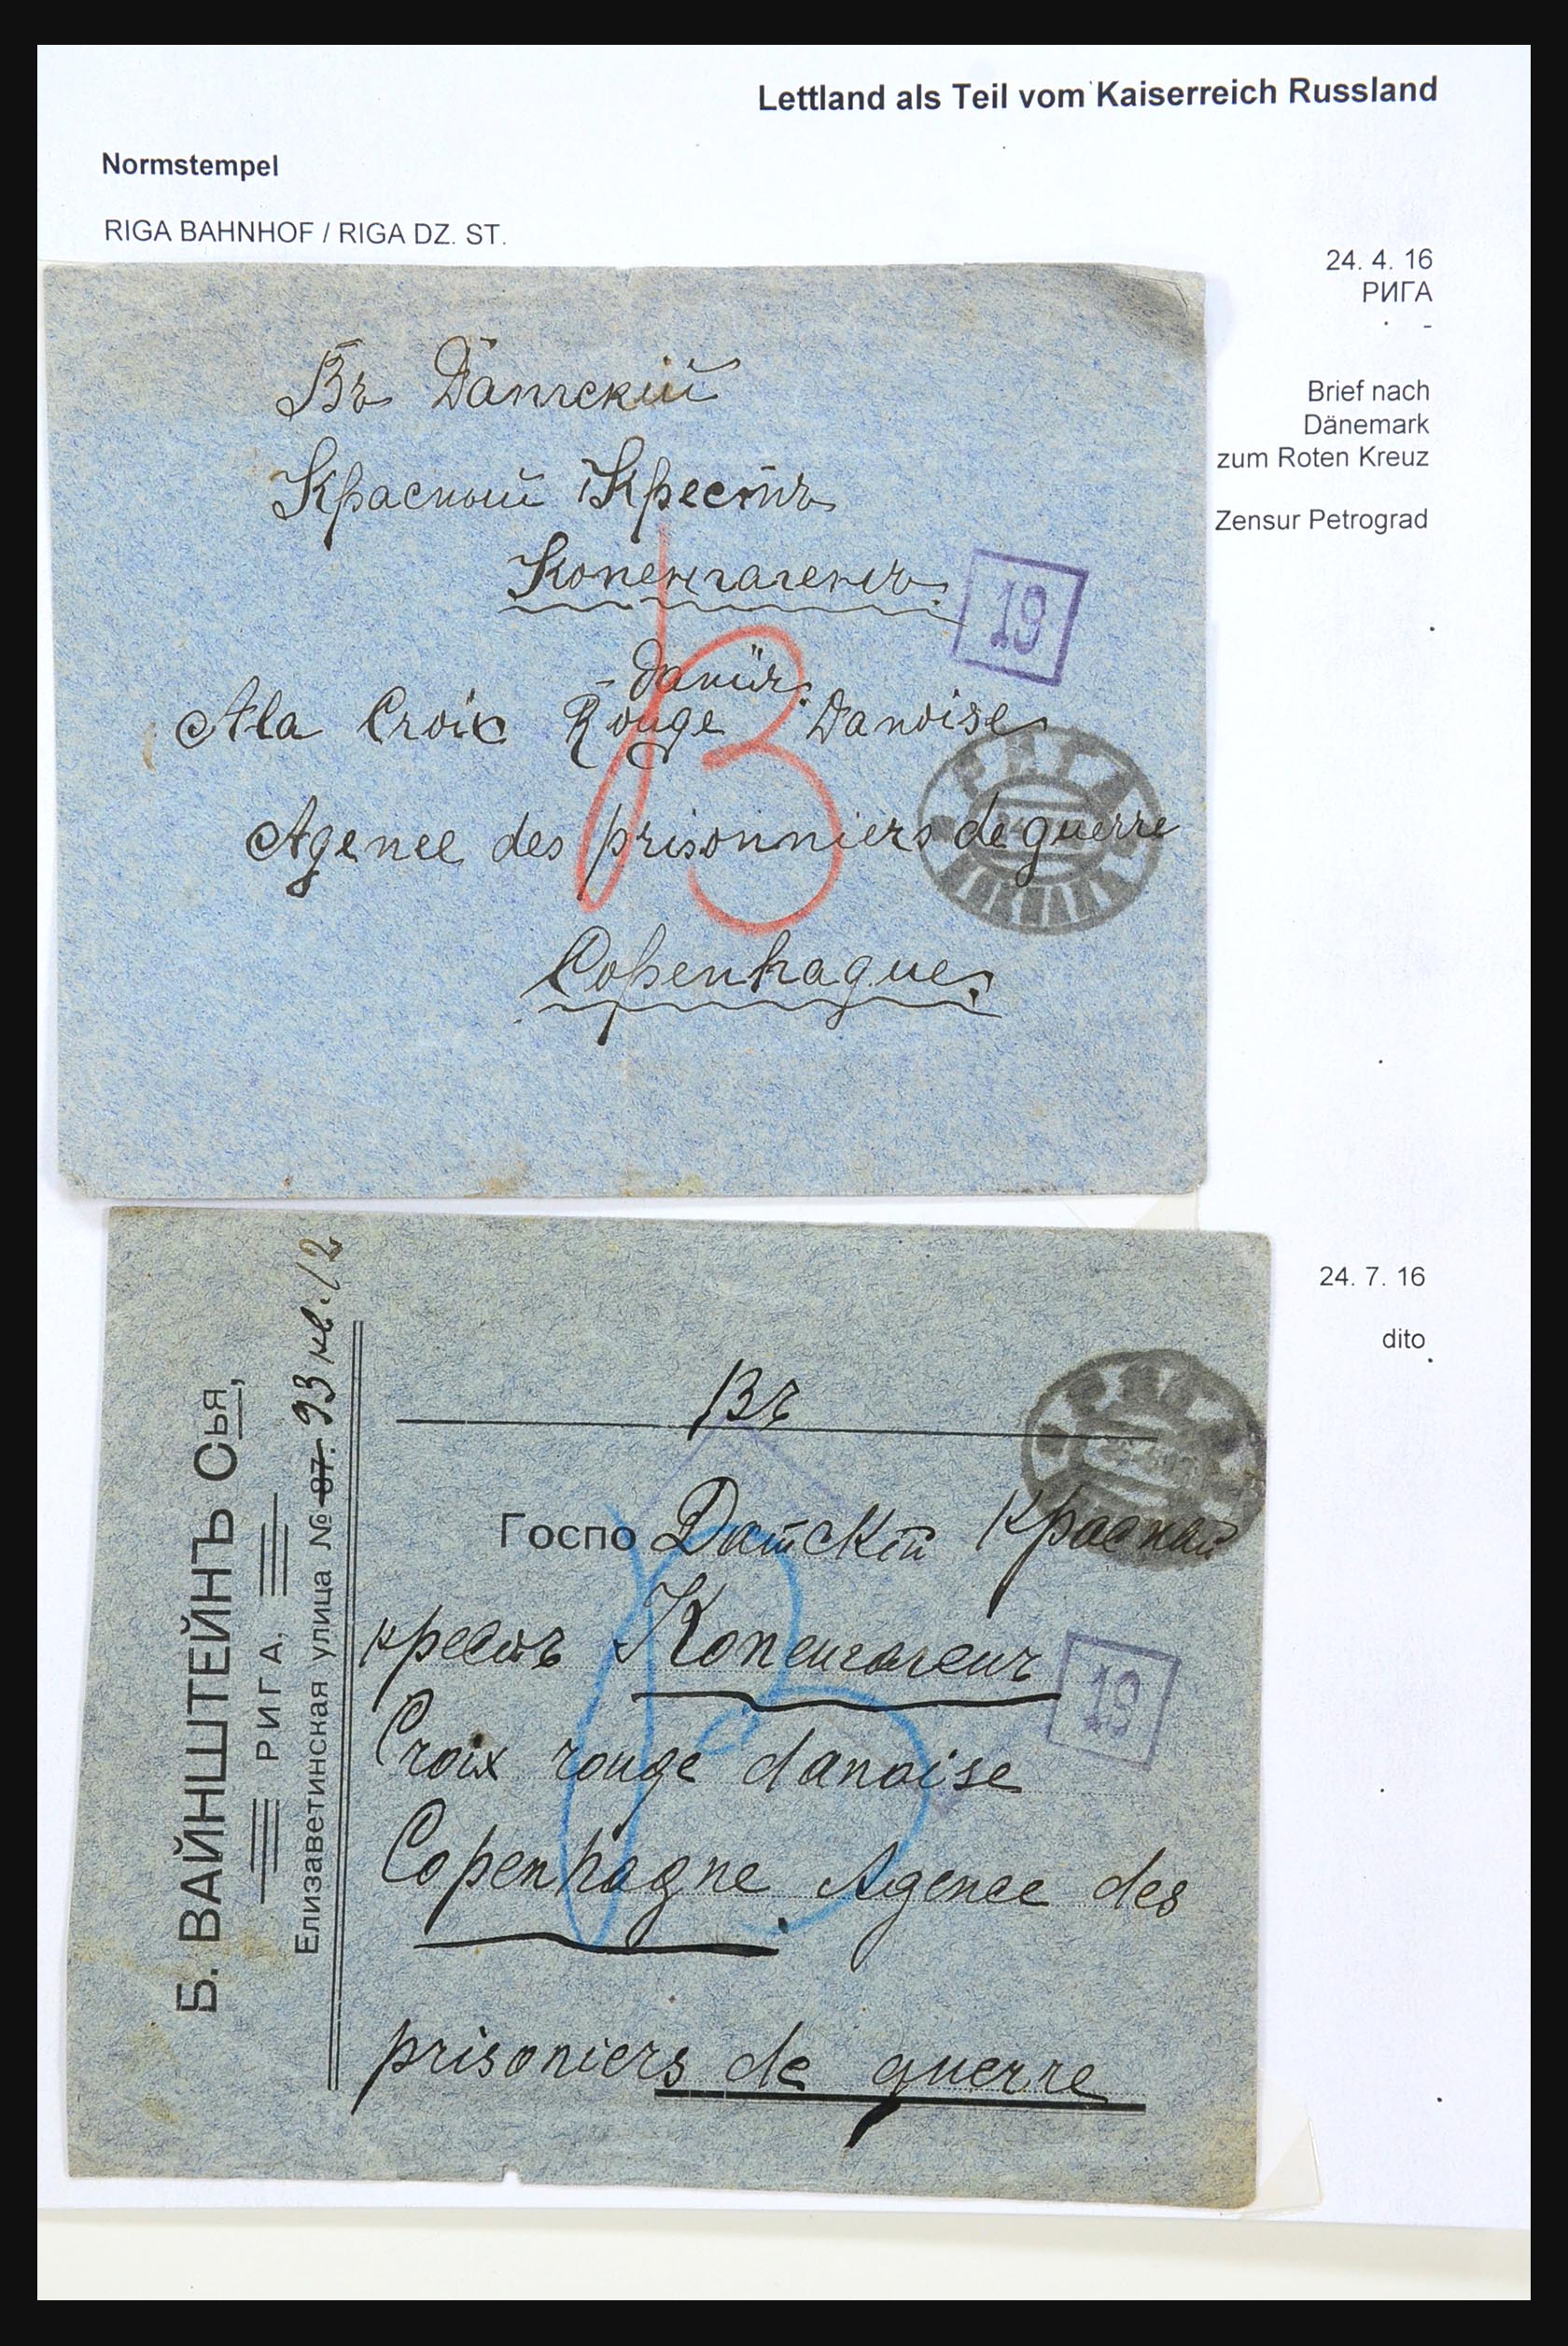 31305 150 - 31305 Letland als deel van Rusland 1817-1918.